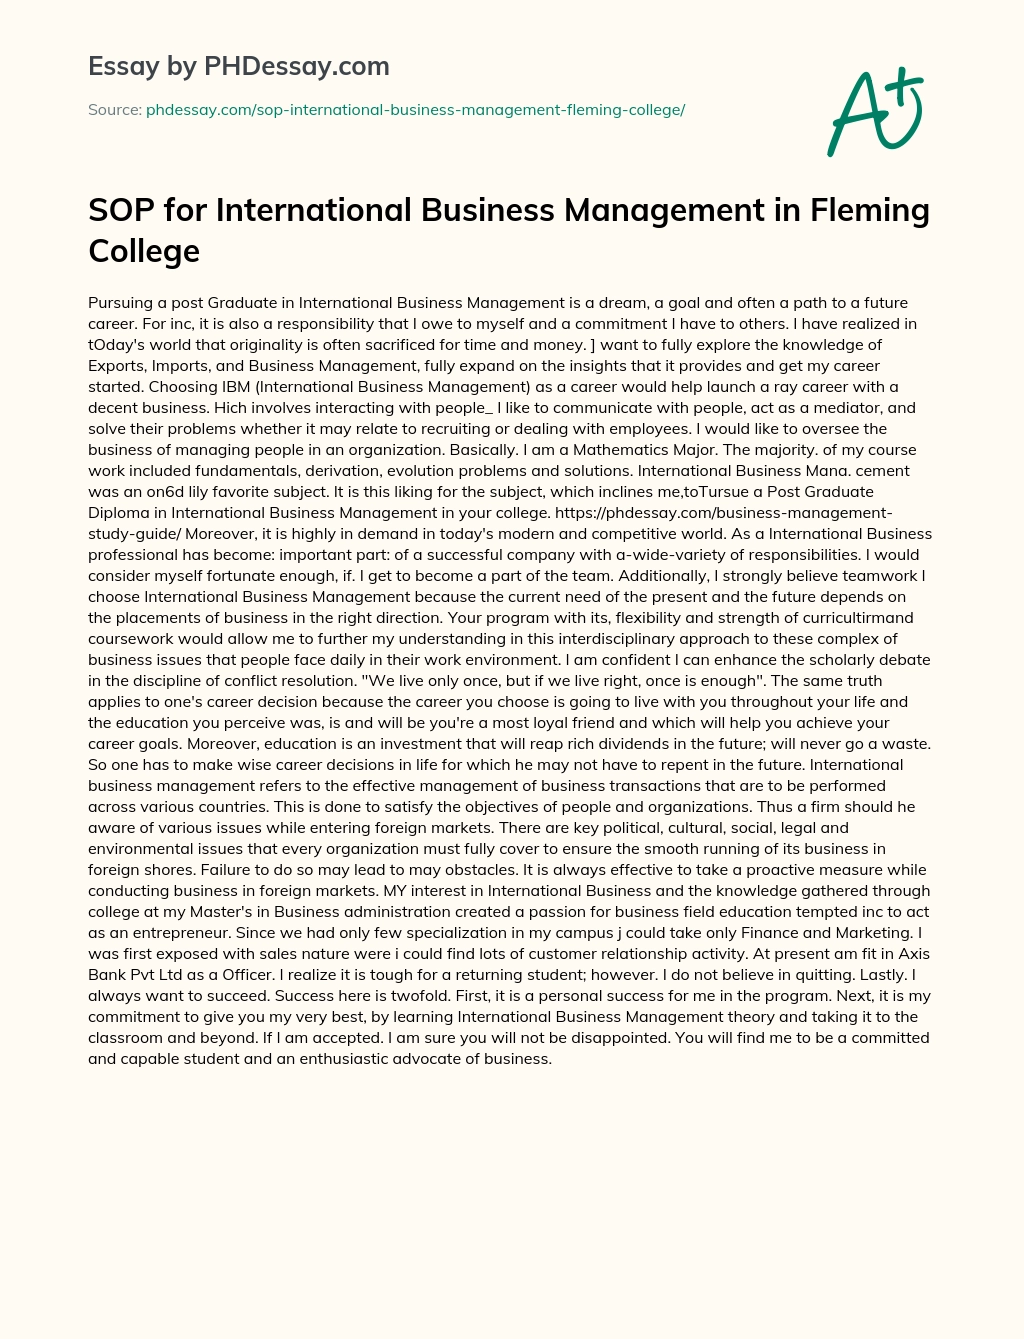 SOP for International Business Management in Fleming College essay